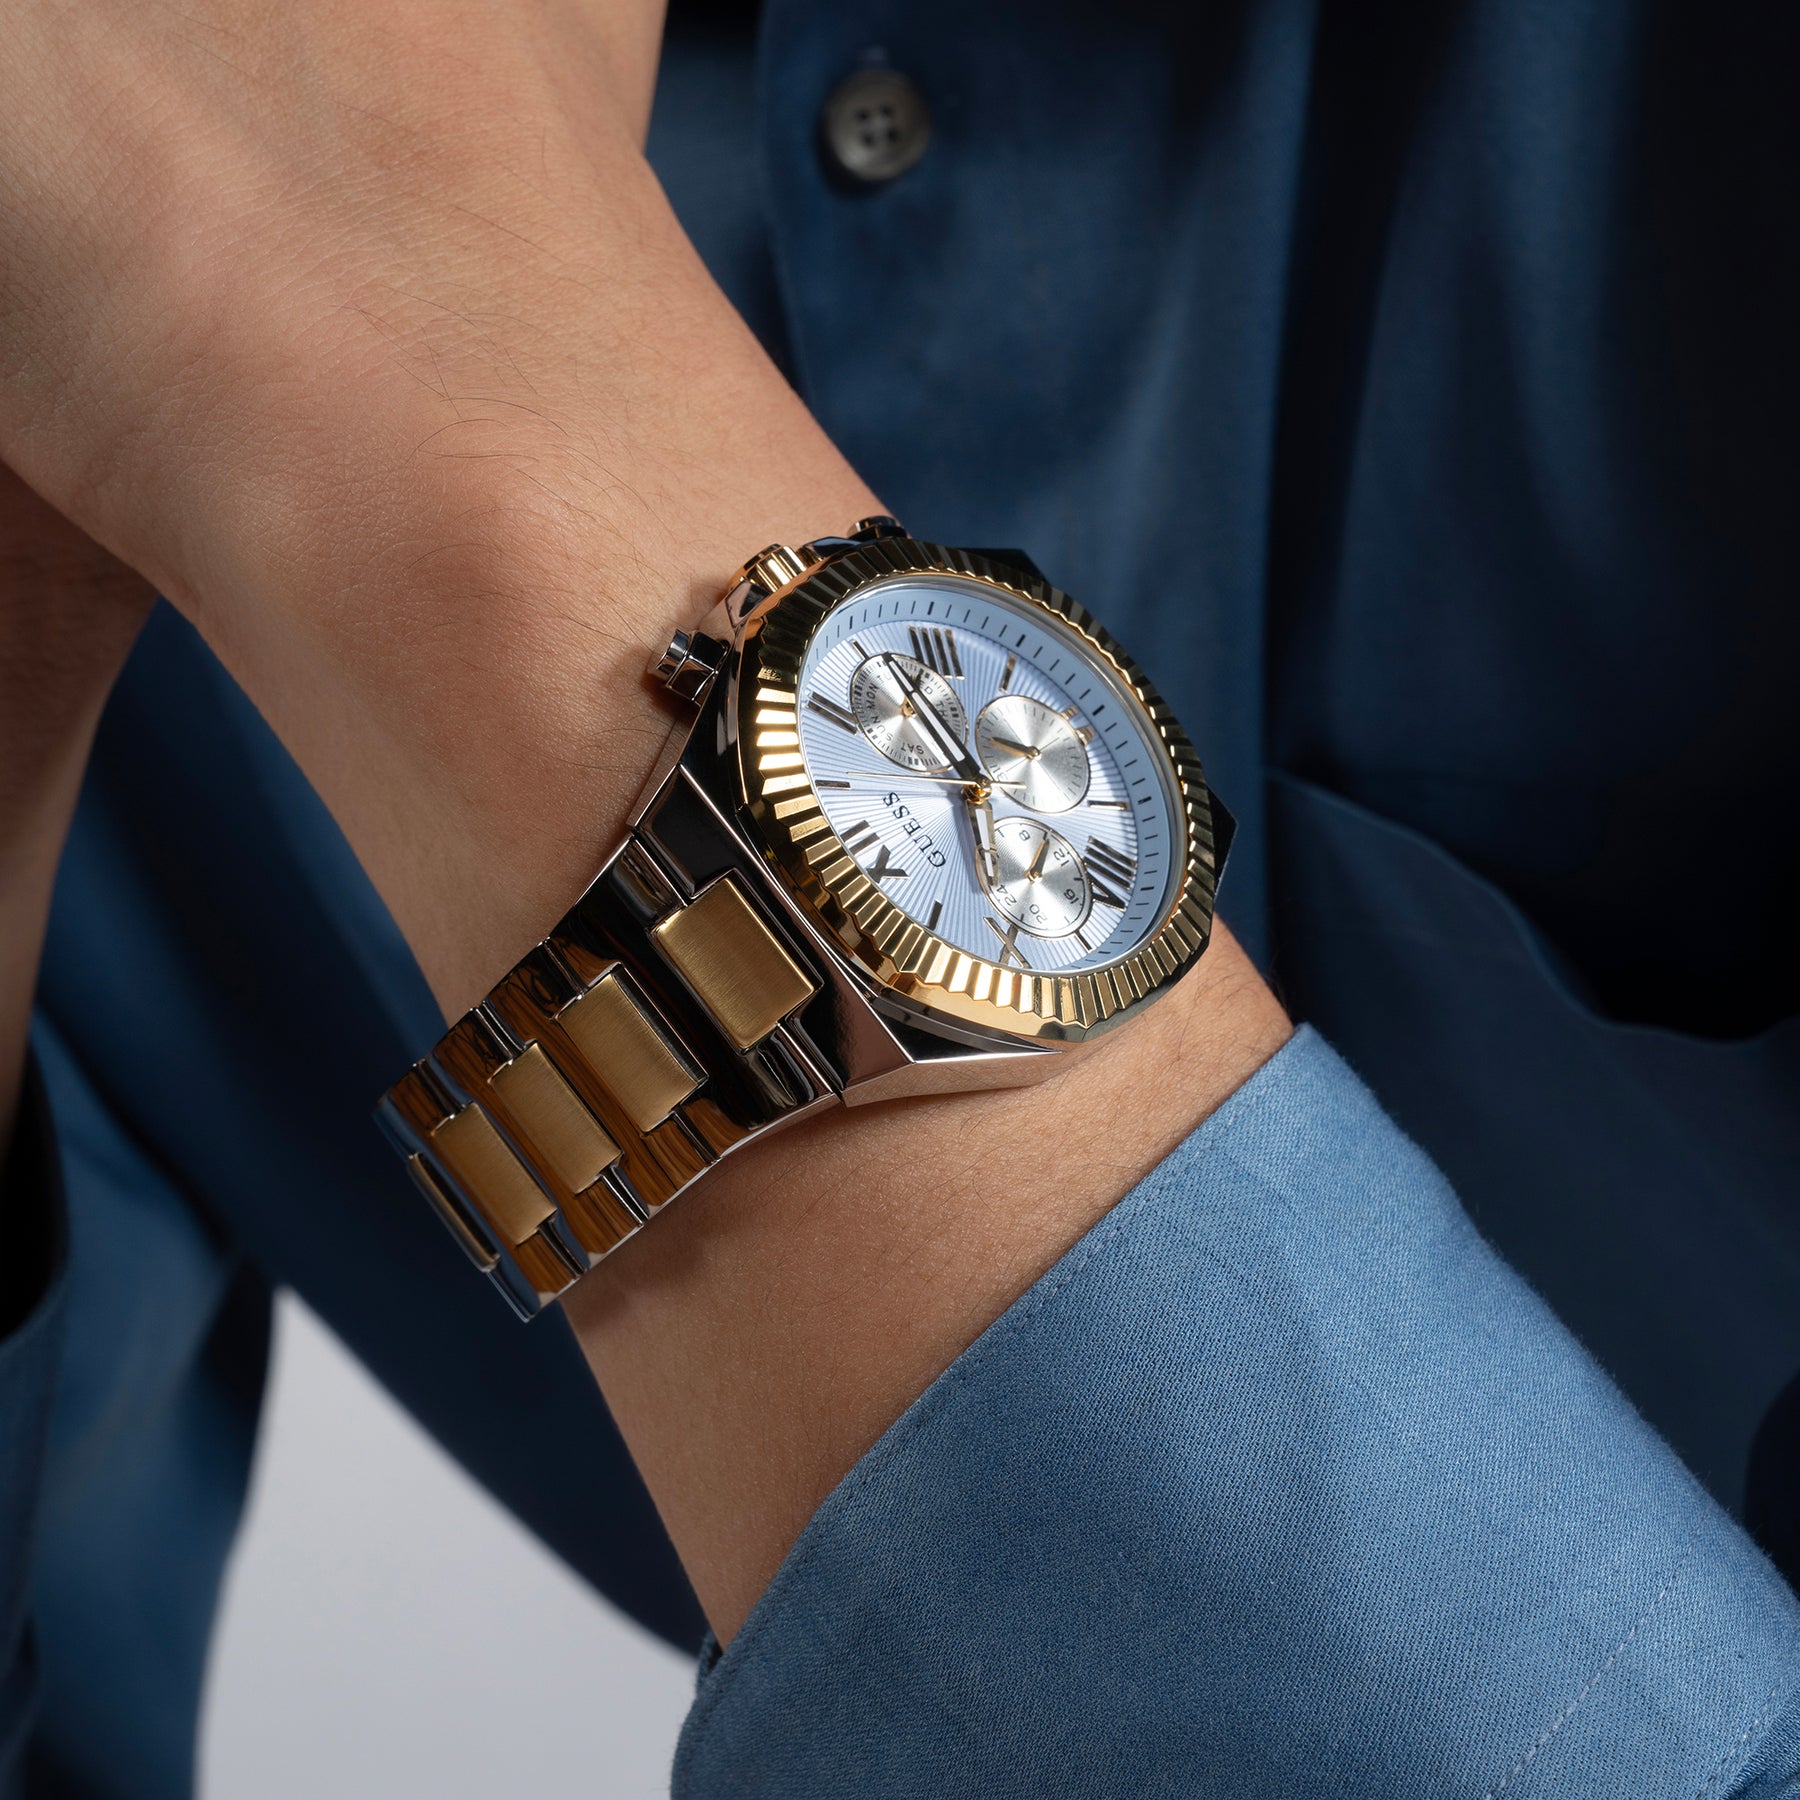 Guess Men's 44mm Silver and Gold Equity Blue Quartz Watch GW0703G3